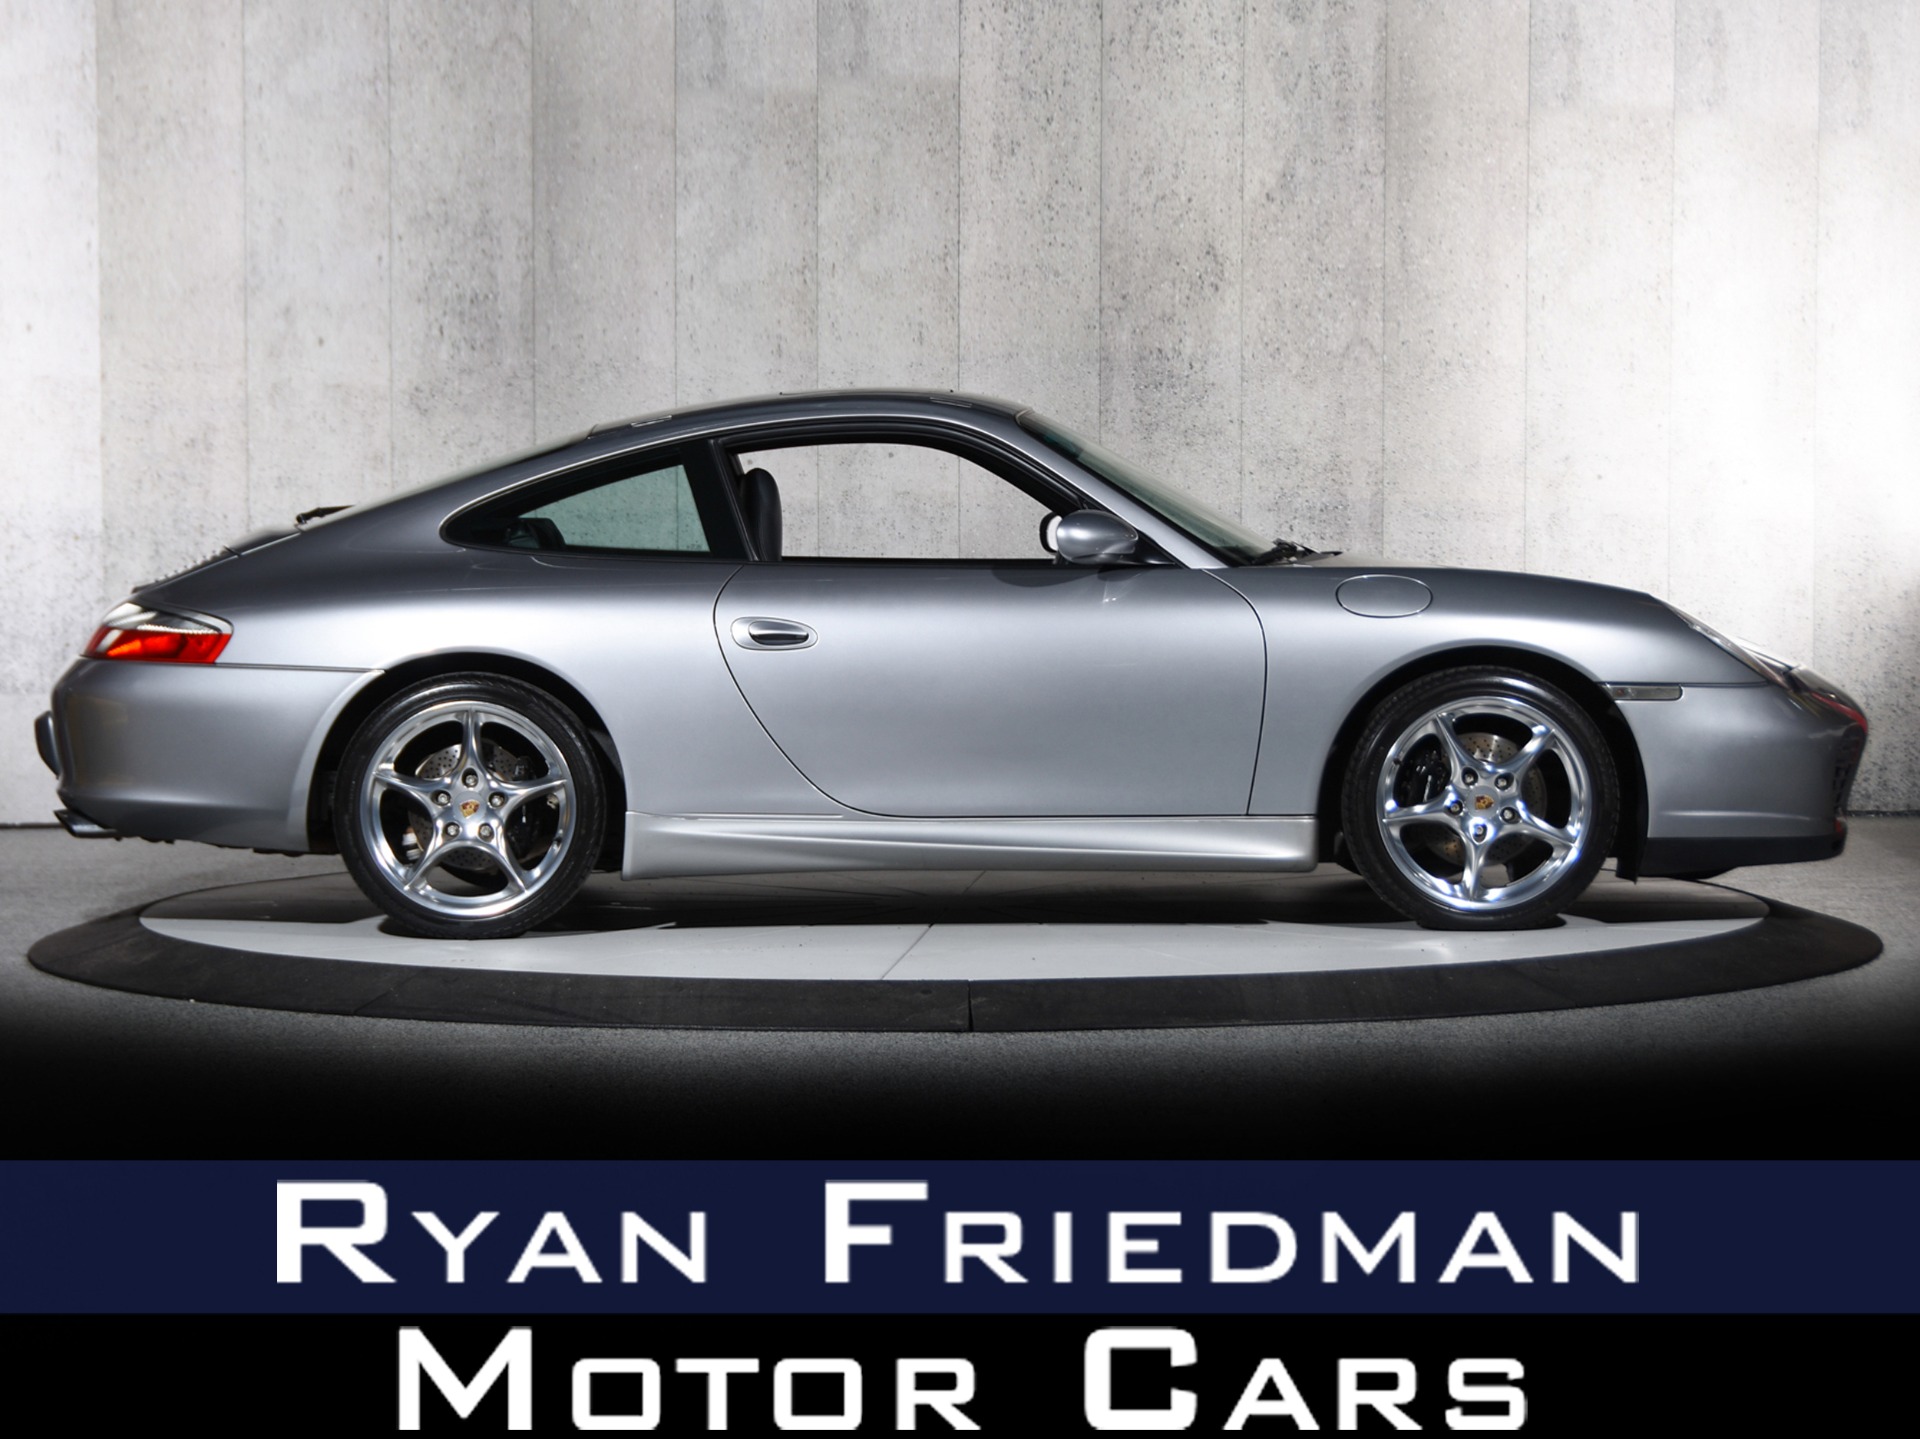 Used 2004 Porsche 911 Carrera Sale | Ryan #1351 Motor Anniversary 40th Edition Stock Friedman Cars LLC (Sold) For